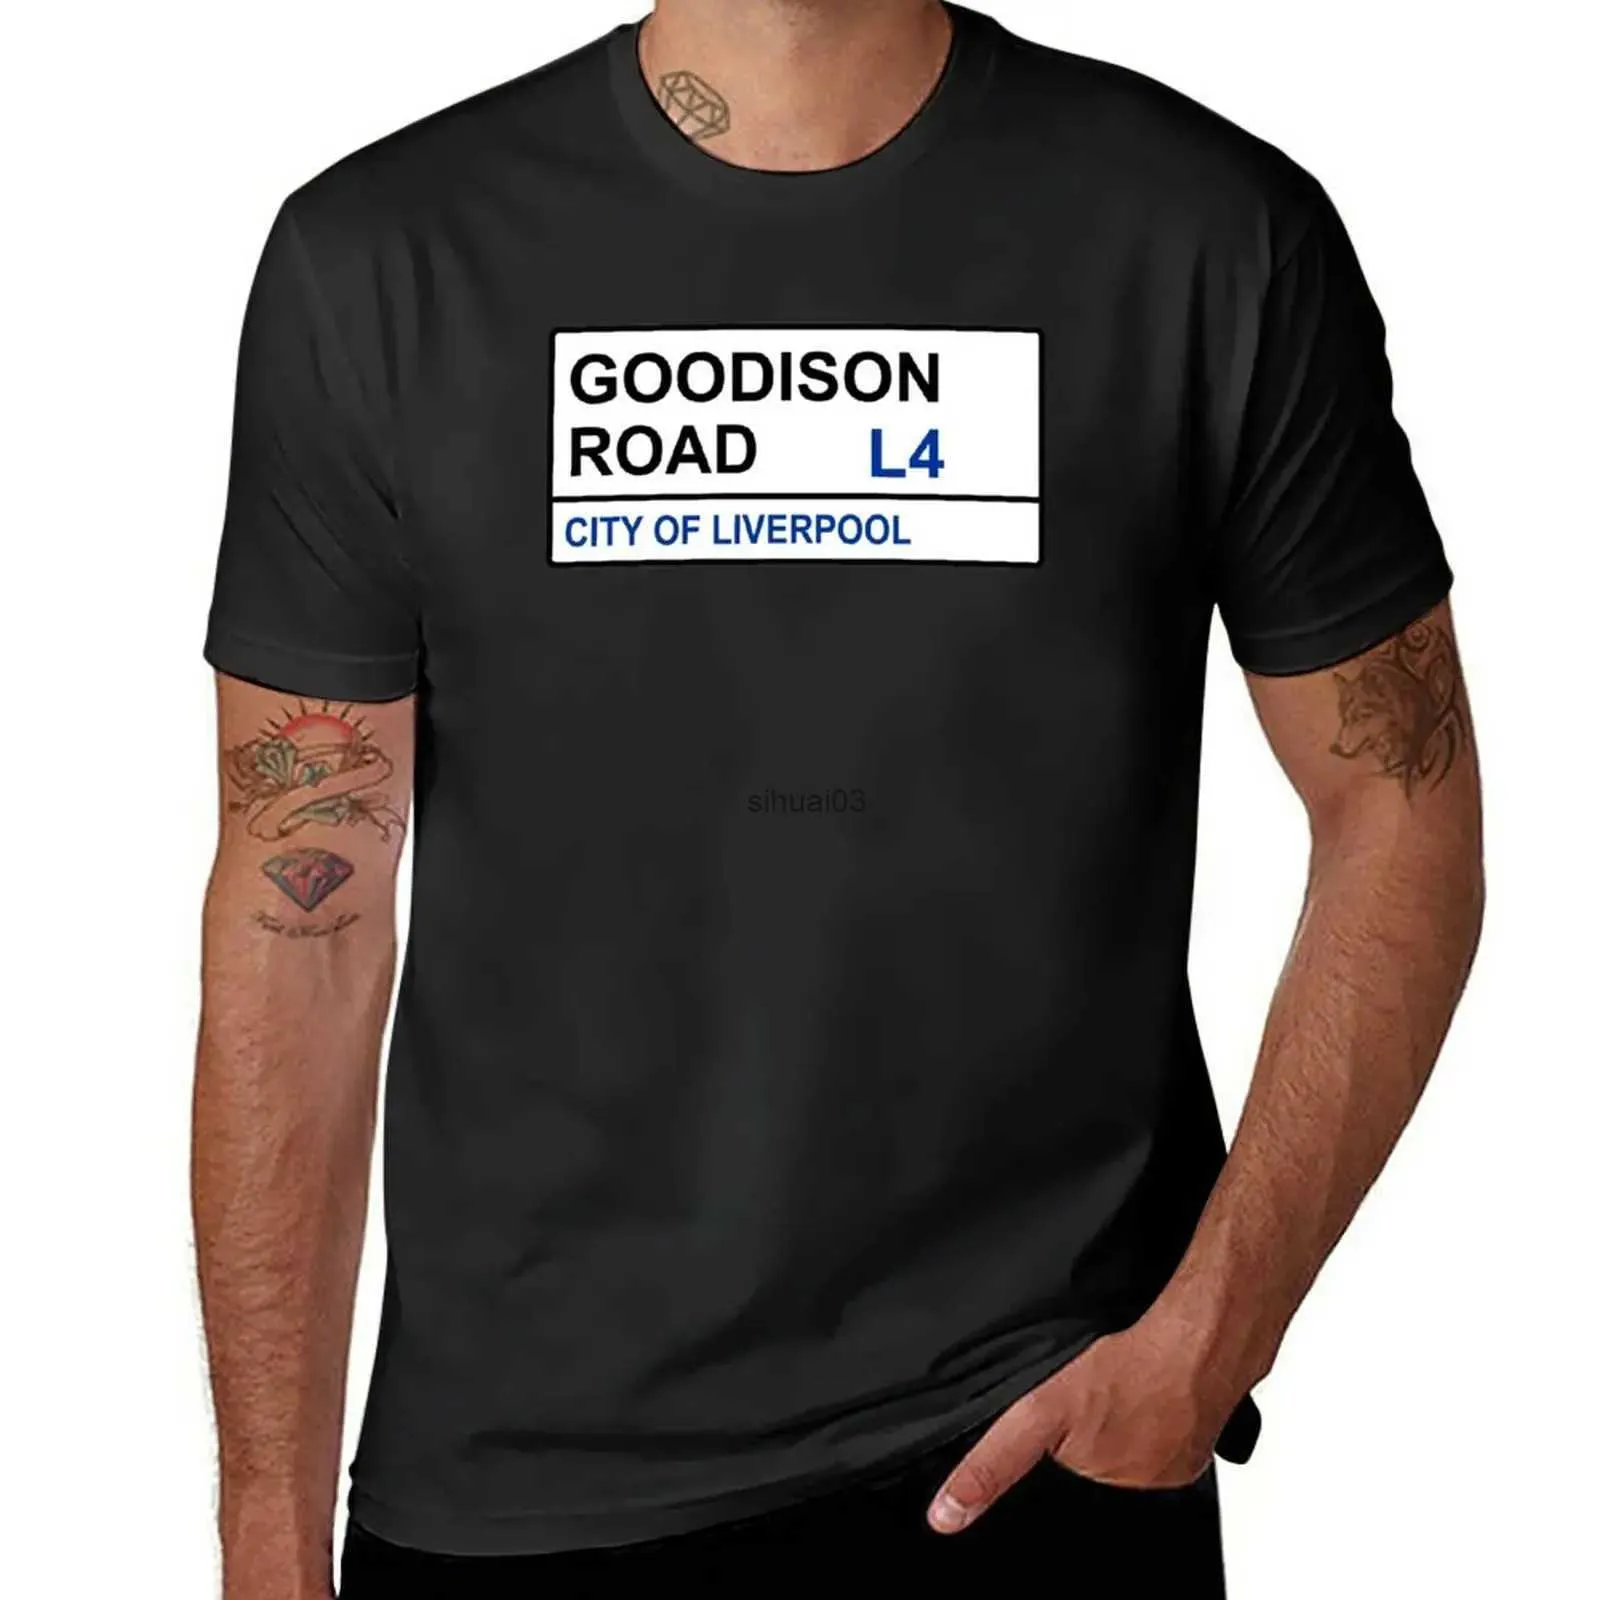 Men's T-Shirts New Everton Football Team Goodison Road Street Sign T-Shirt hippie clothes vintage clothes quick drying shirt T-shirt men